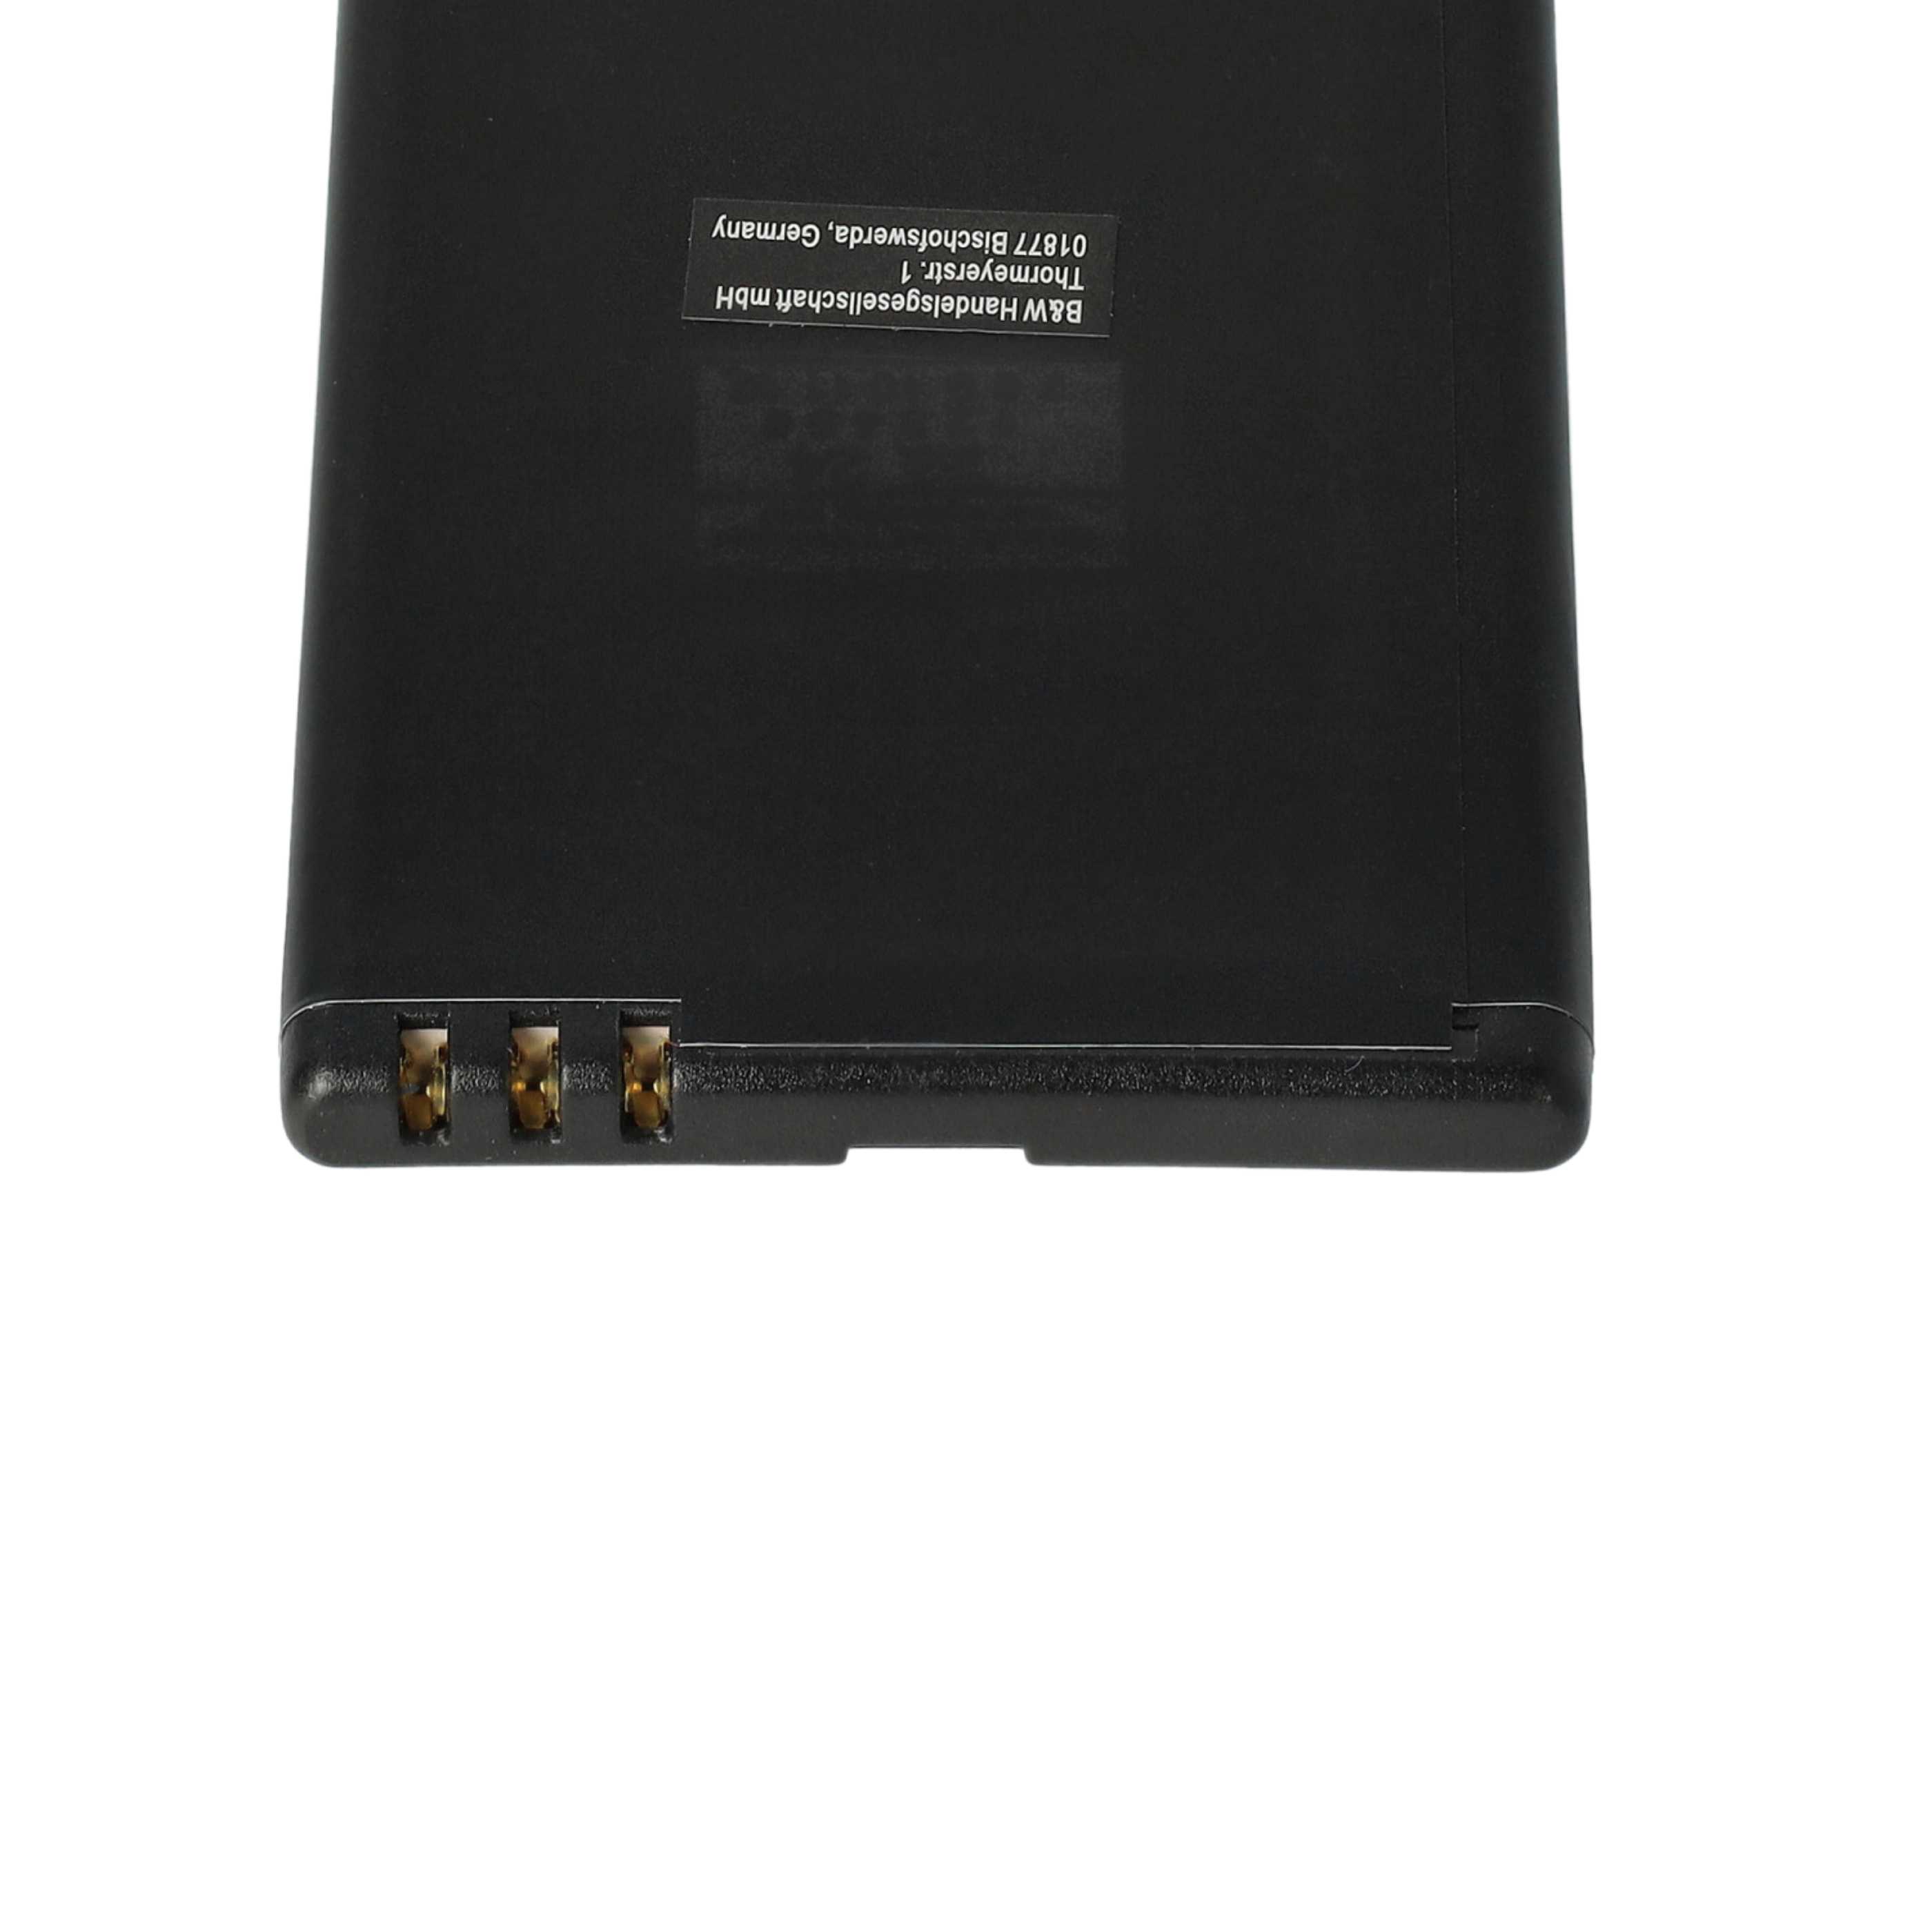 Akumulator bateria do telefonu smartfona zam. Aligator D243, BL-6900, BP-140, A800BAL - 1700mAh, 3,7V, Li-Ion